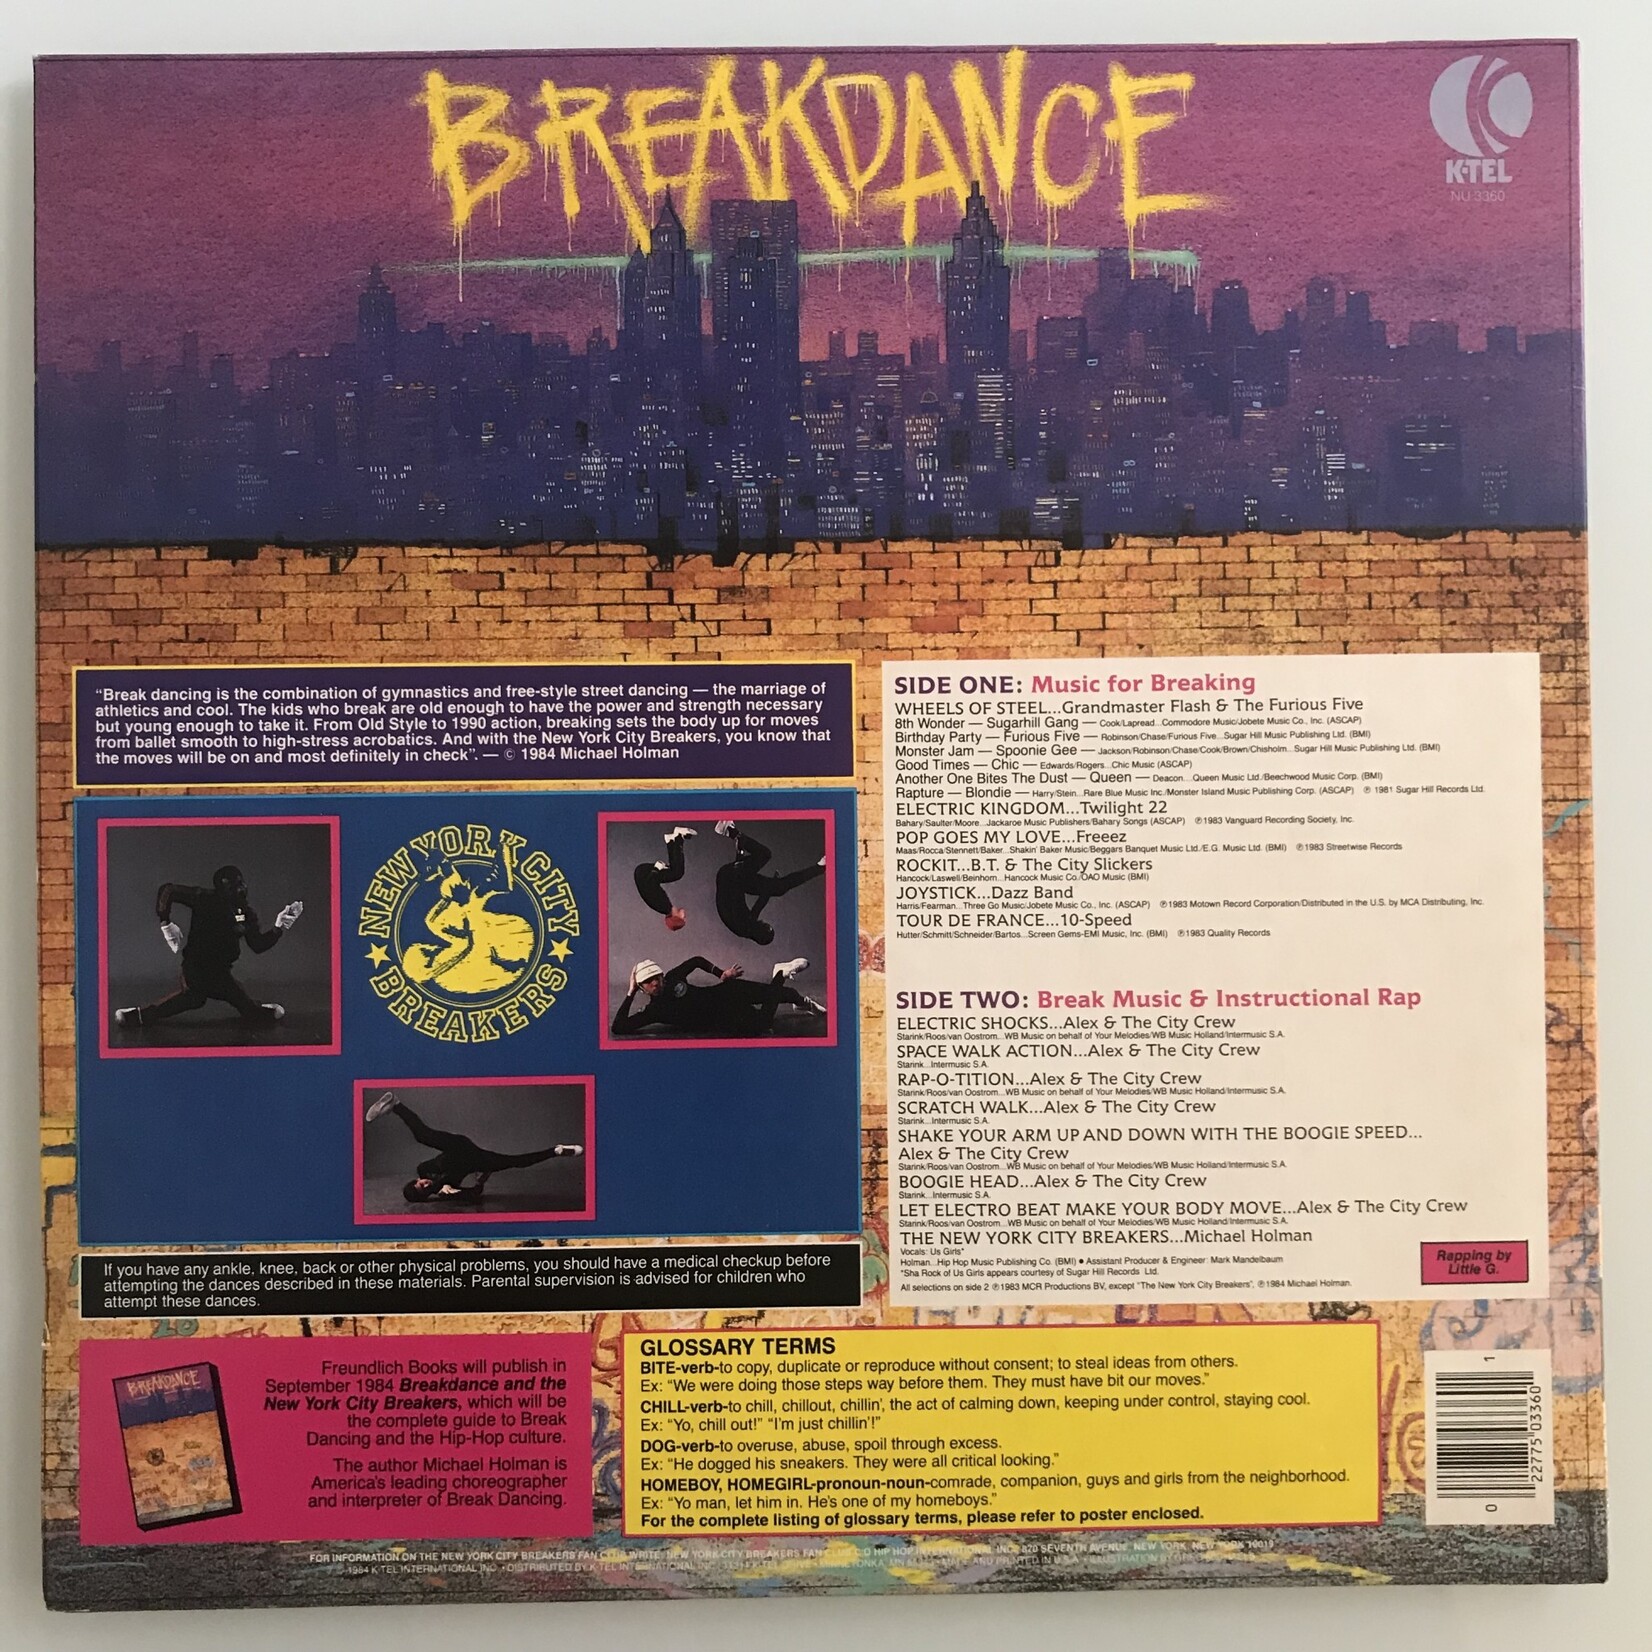 Breakdance: The Best Music For Breaking